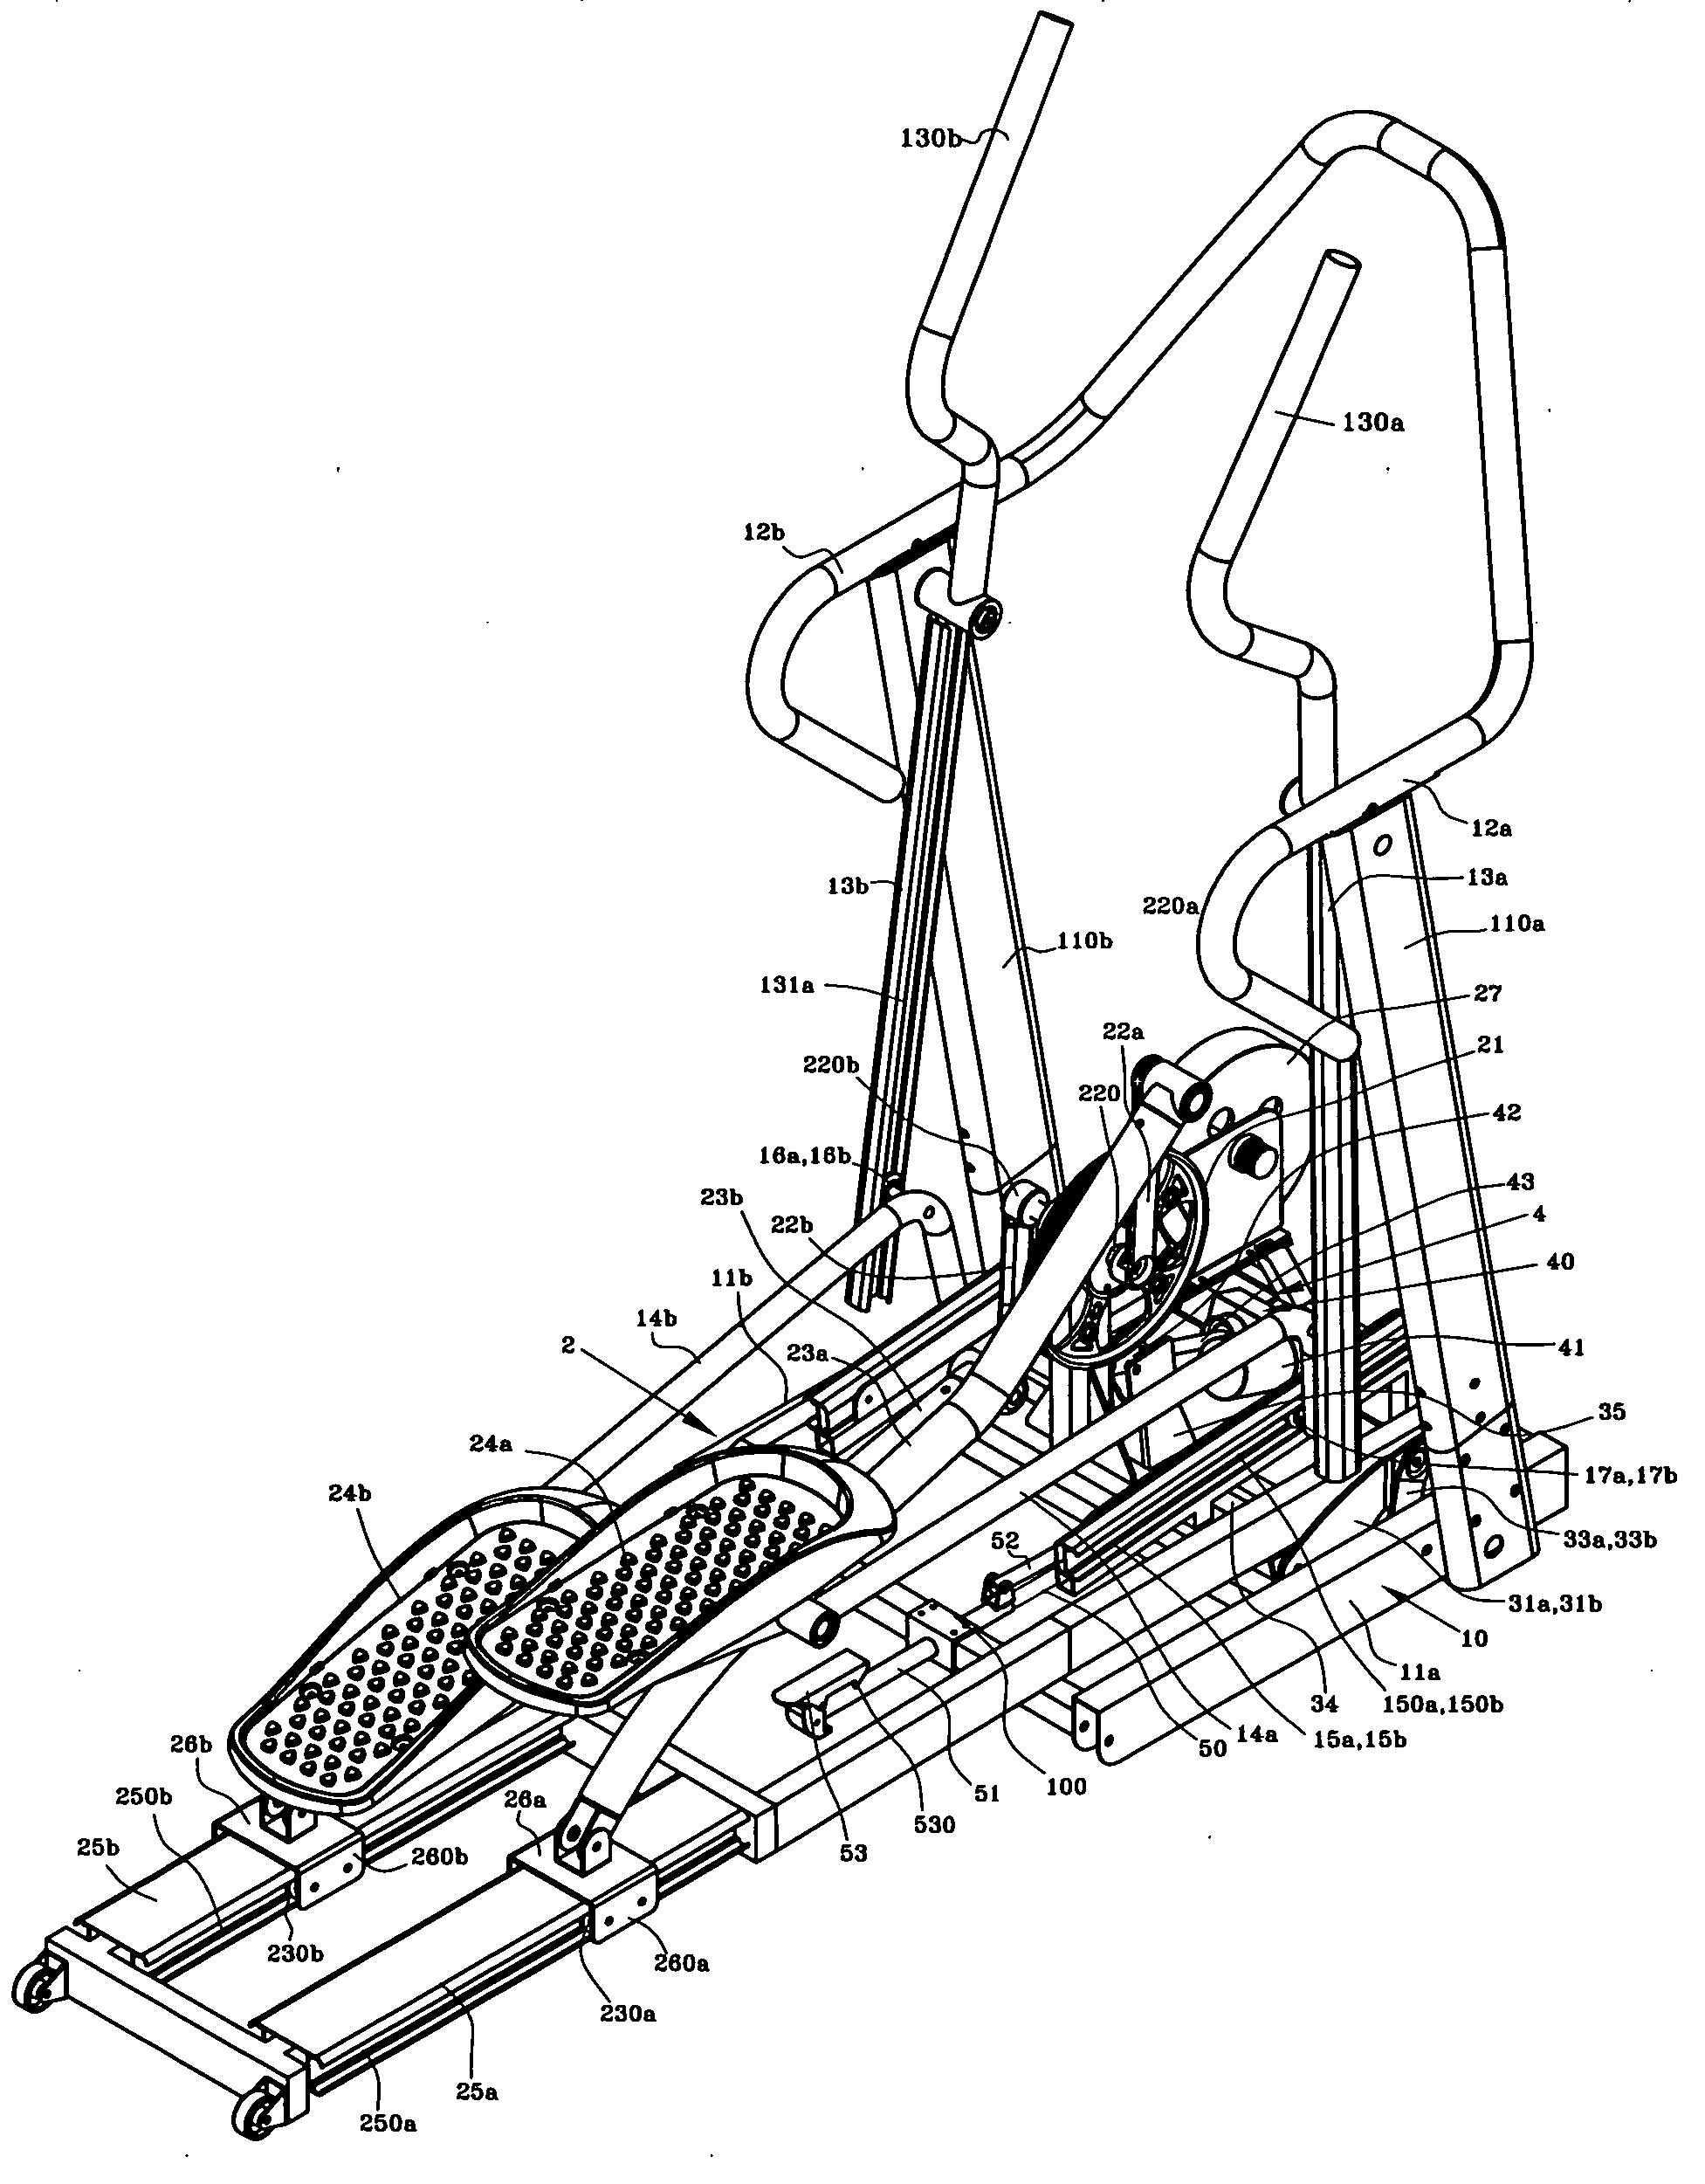 Elliptical fitness machine having incline adjusting mechanism